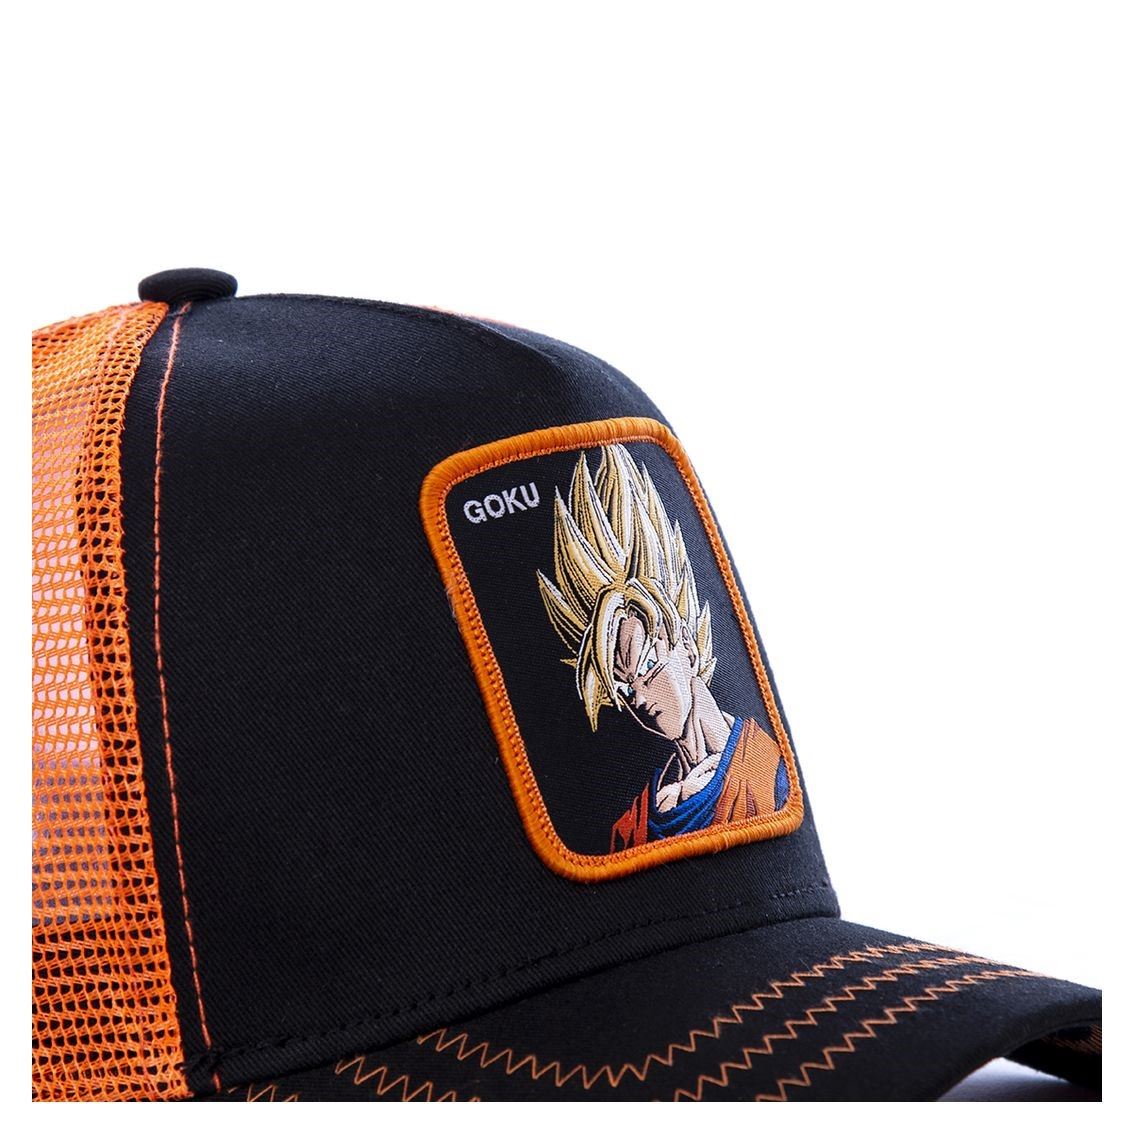 Goku Dragon Ball Z Black Trucker Cap Capslab